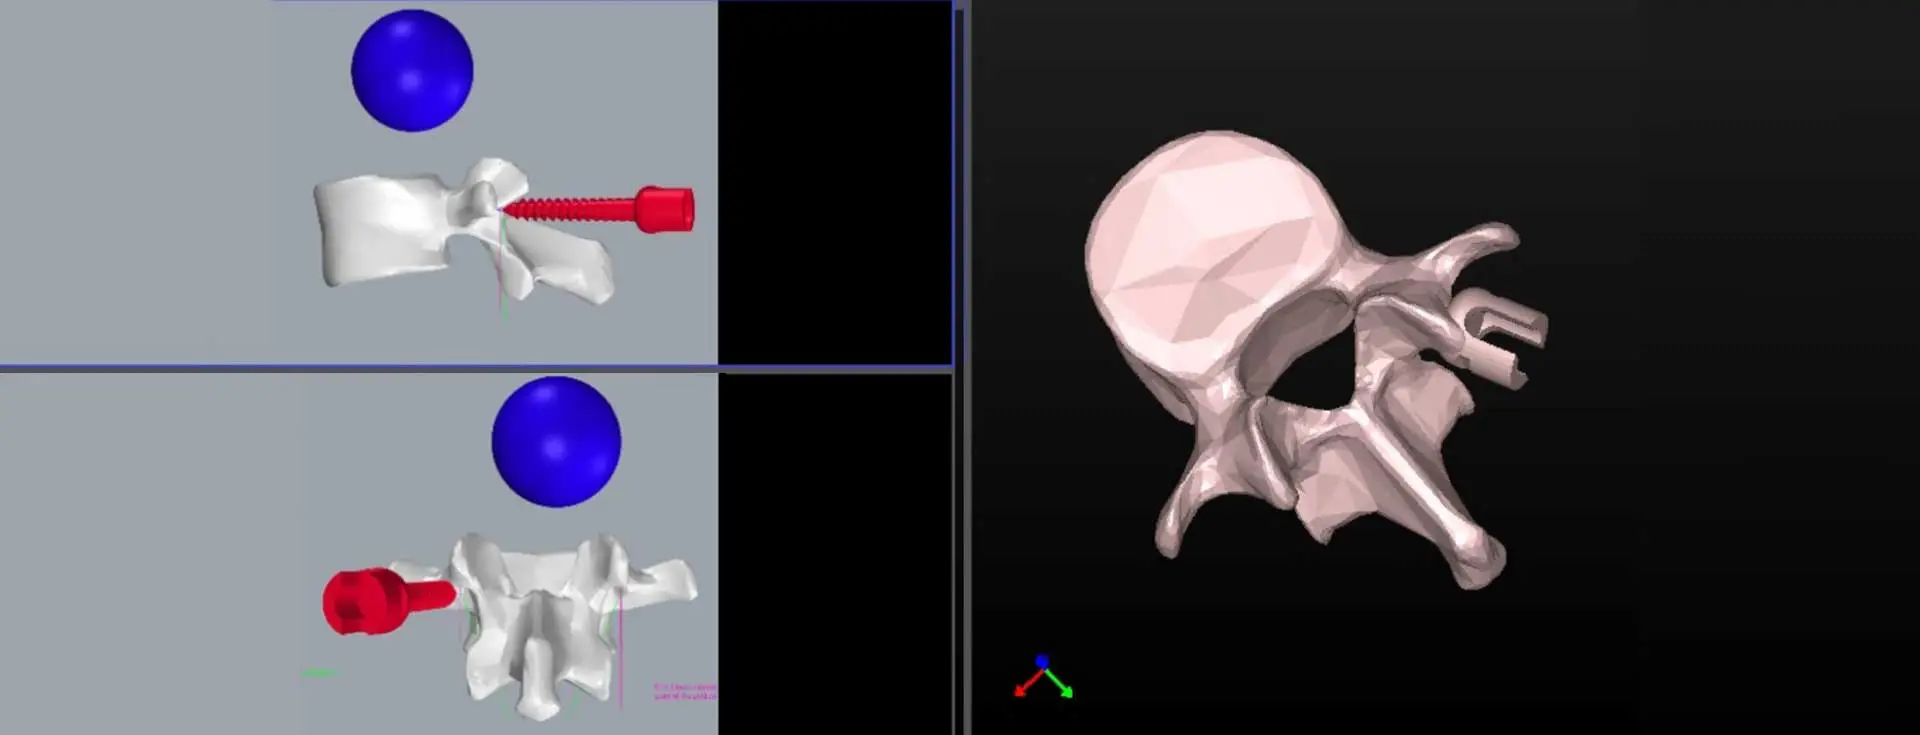 simulation-mode-software-tool-for-bone-implant-visualization